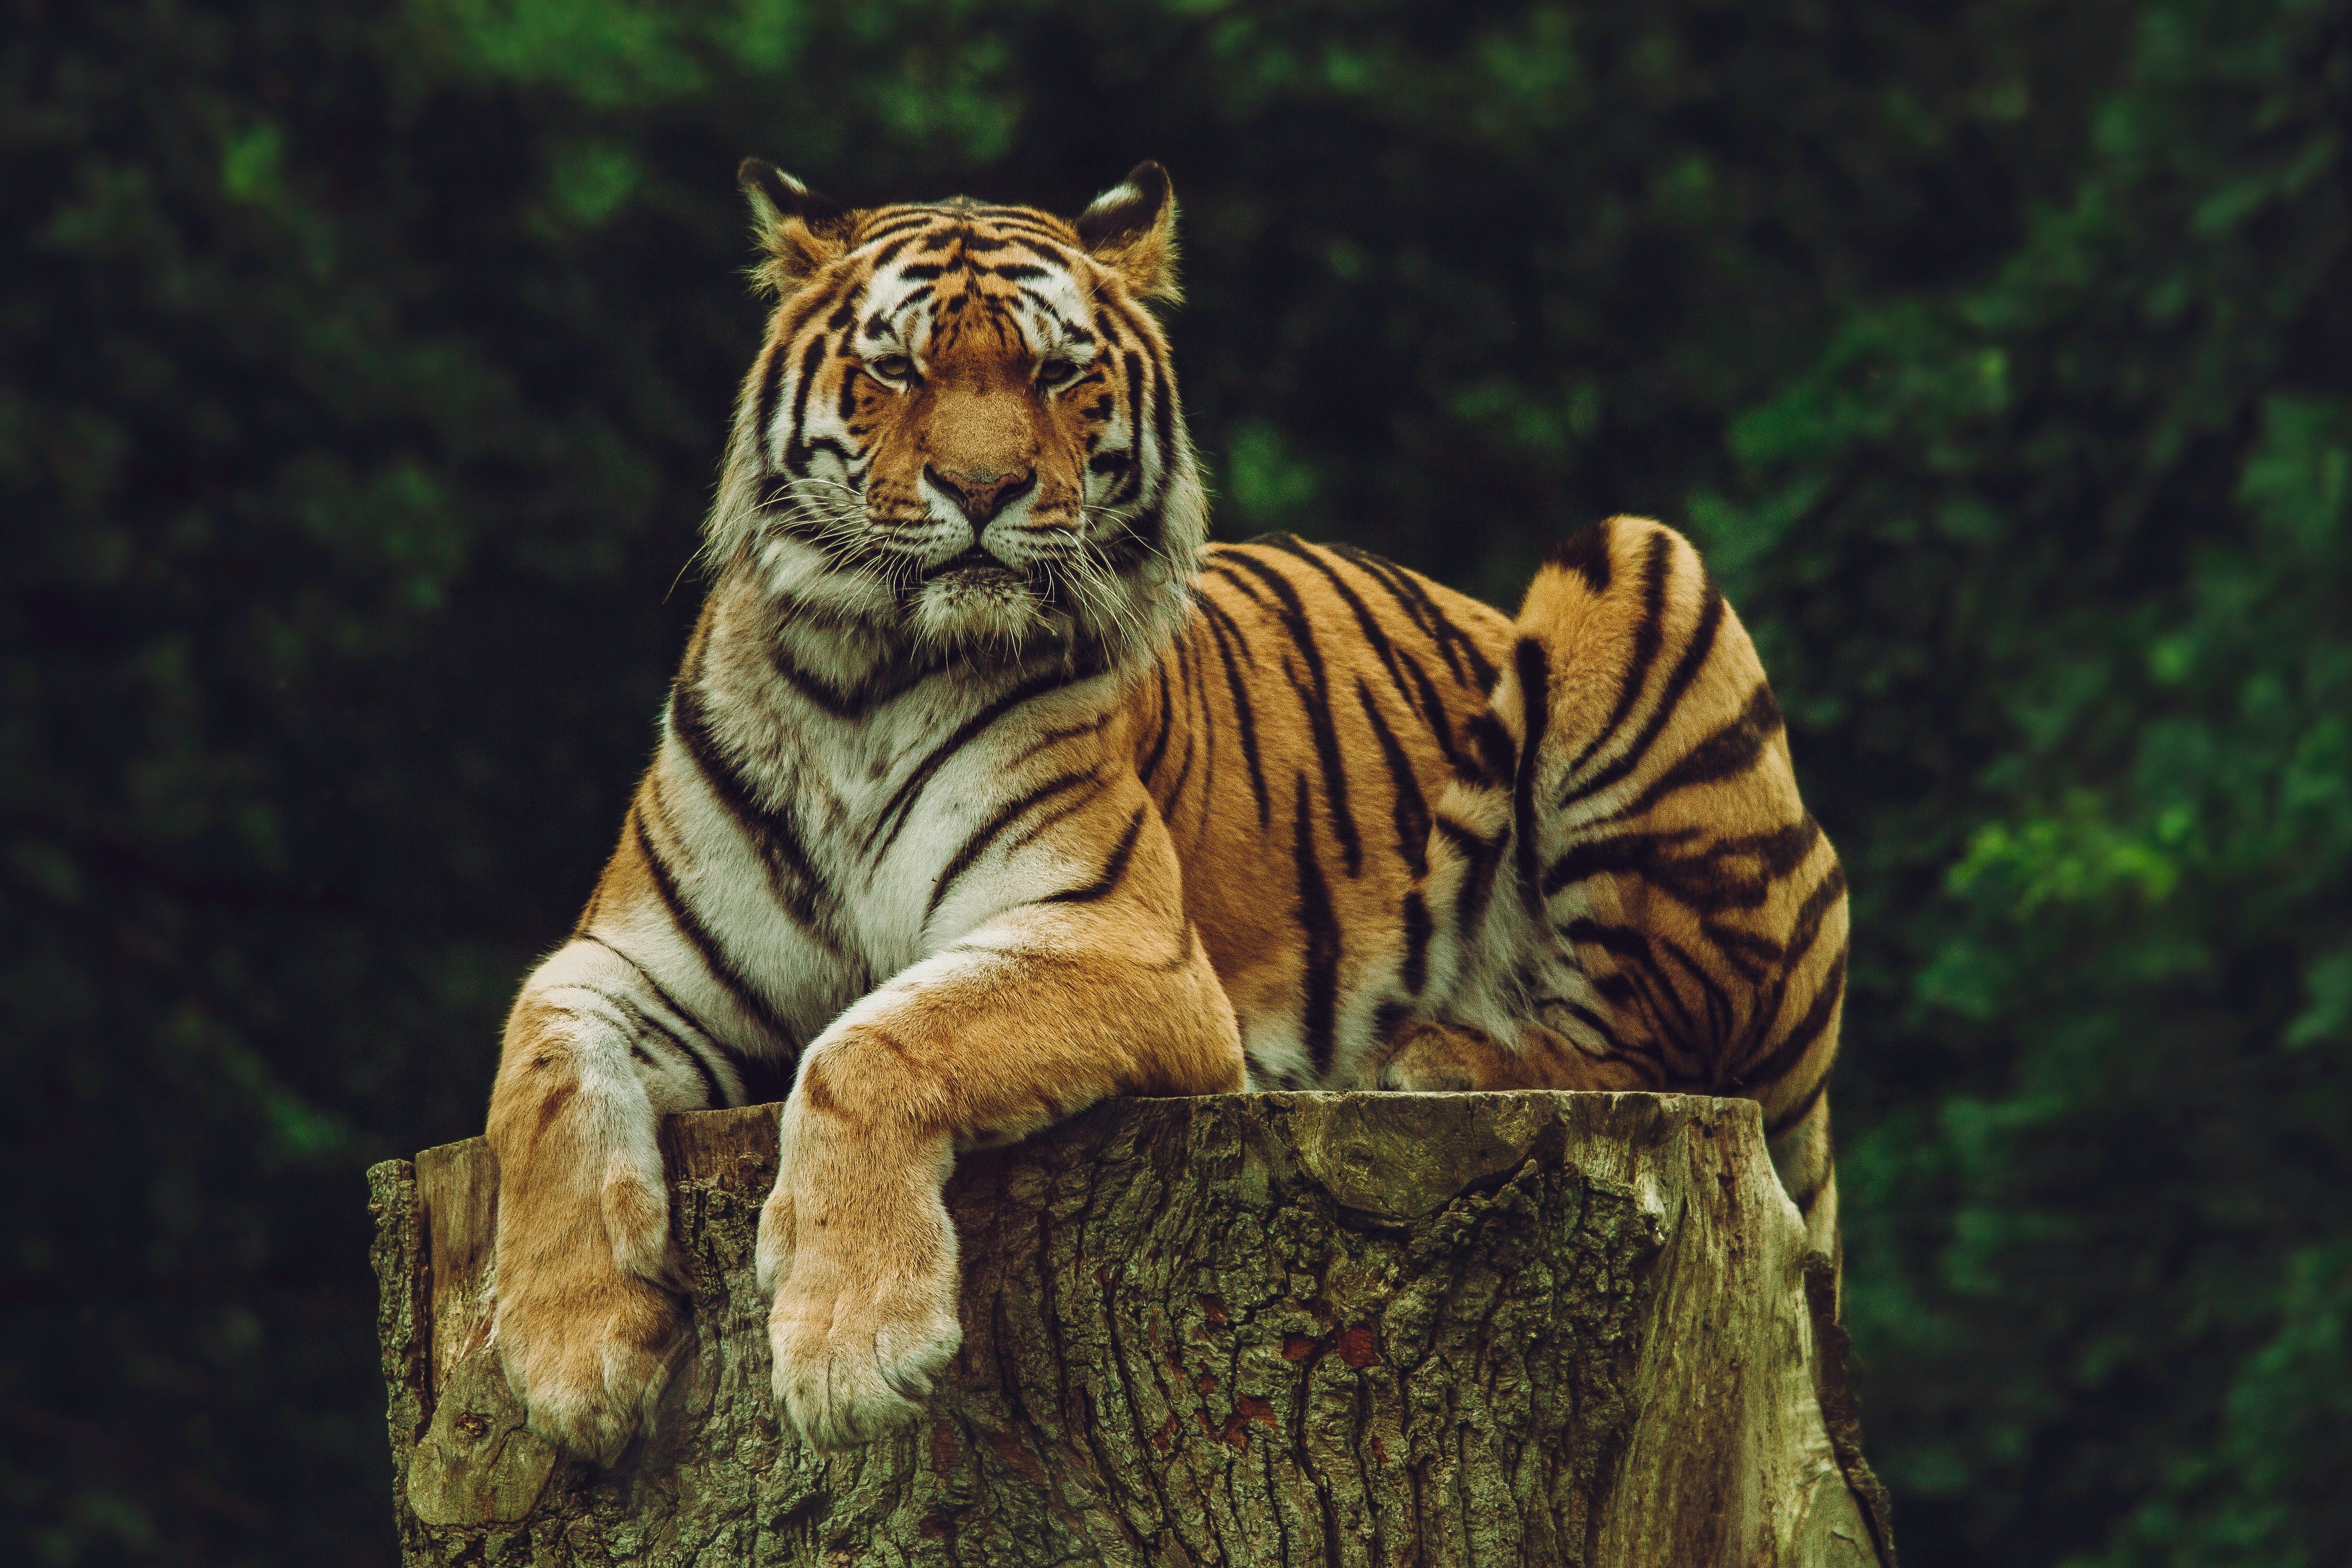 Tiger sitting on a tree stump